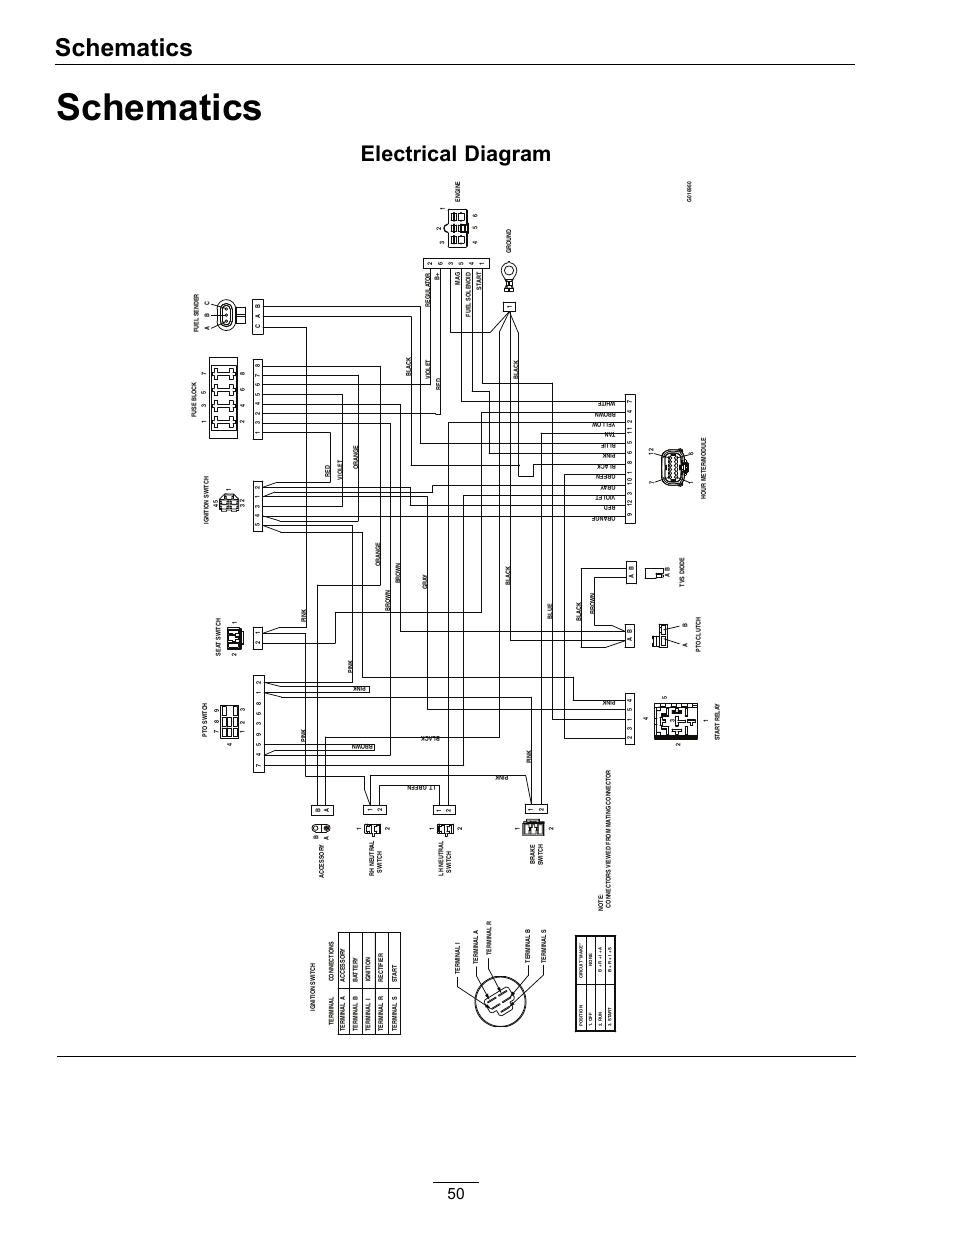 john deere lx188 wiring diagram